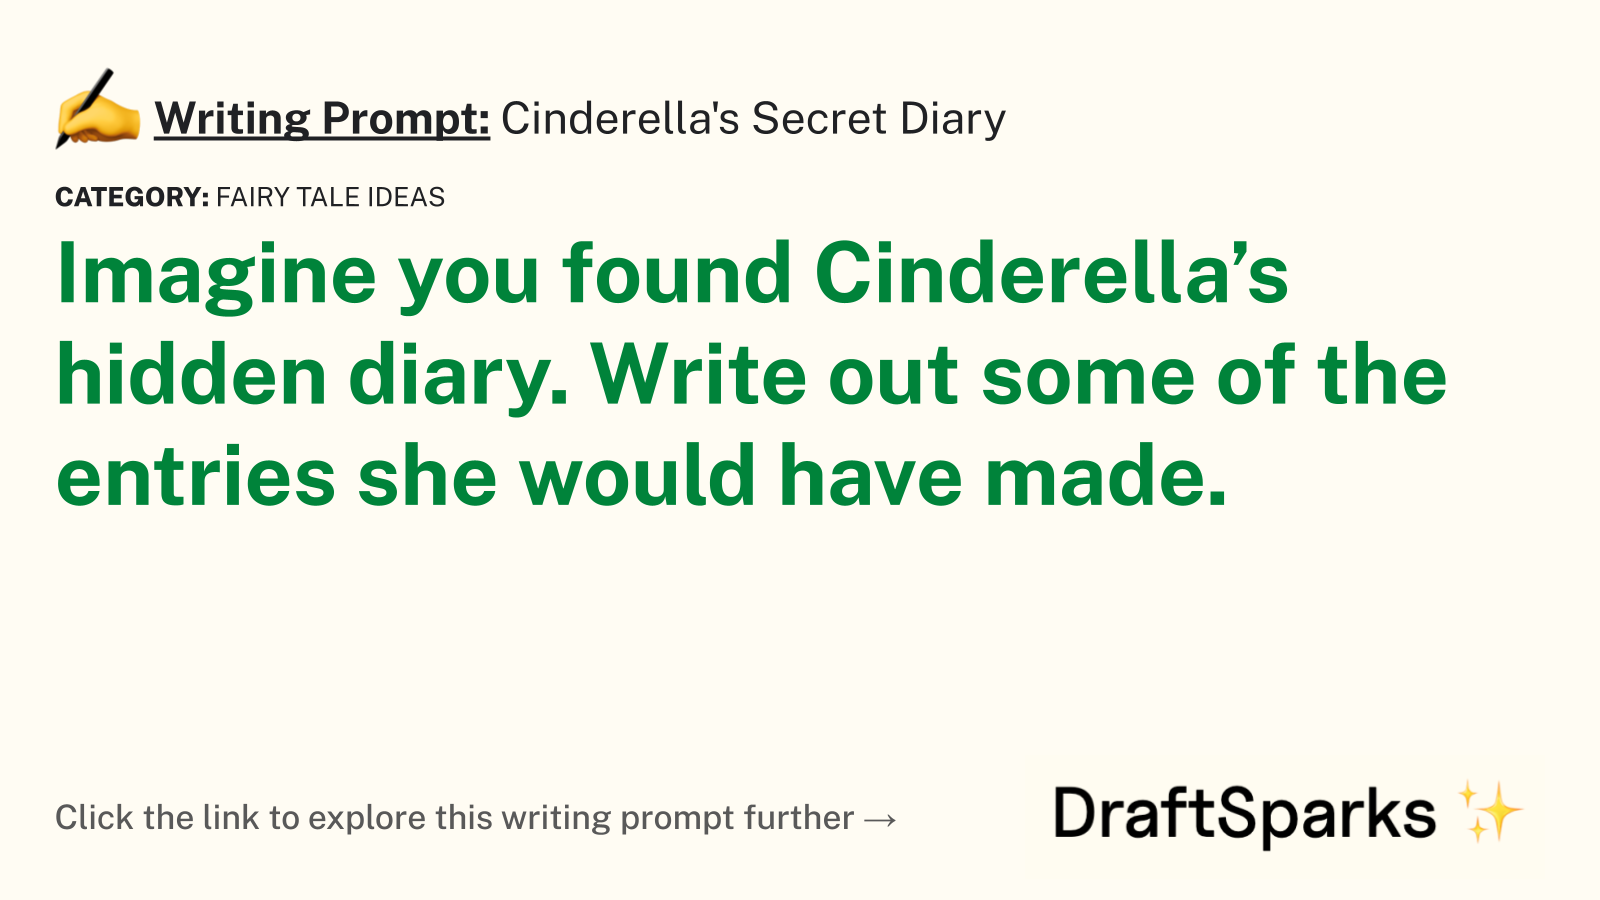 Cinderella’s Secret Diary